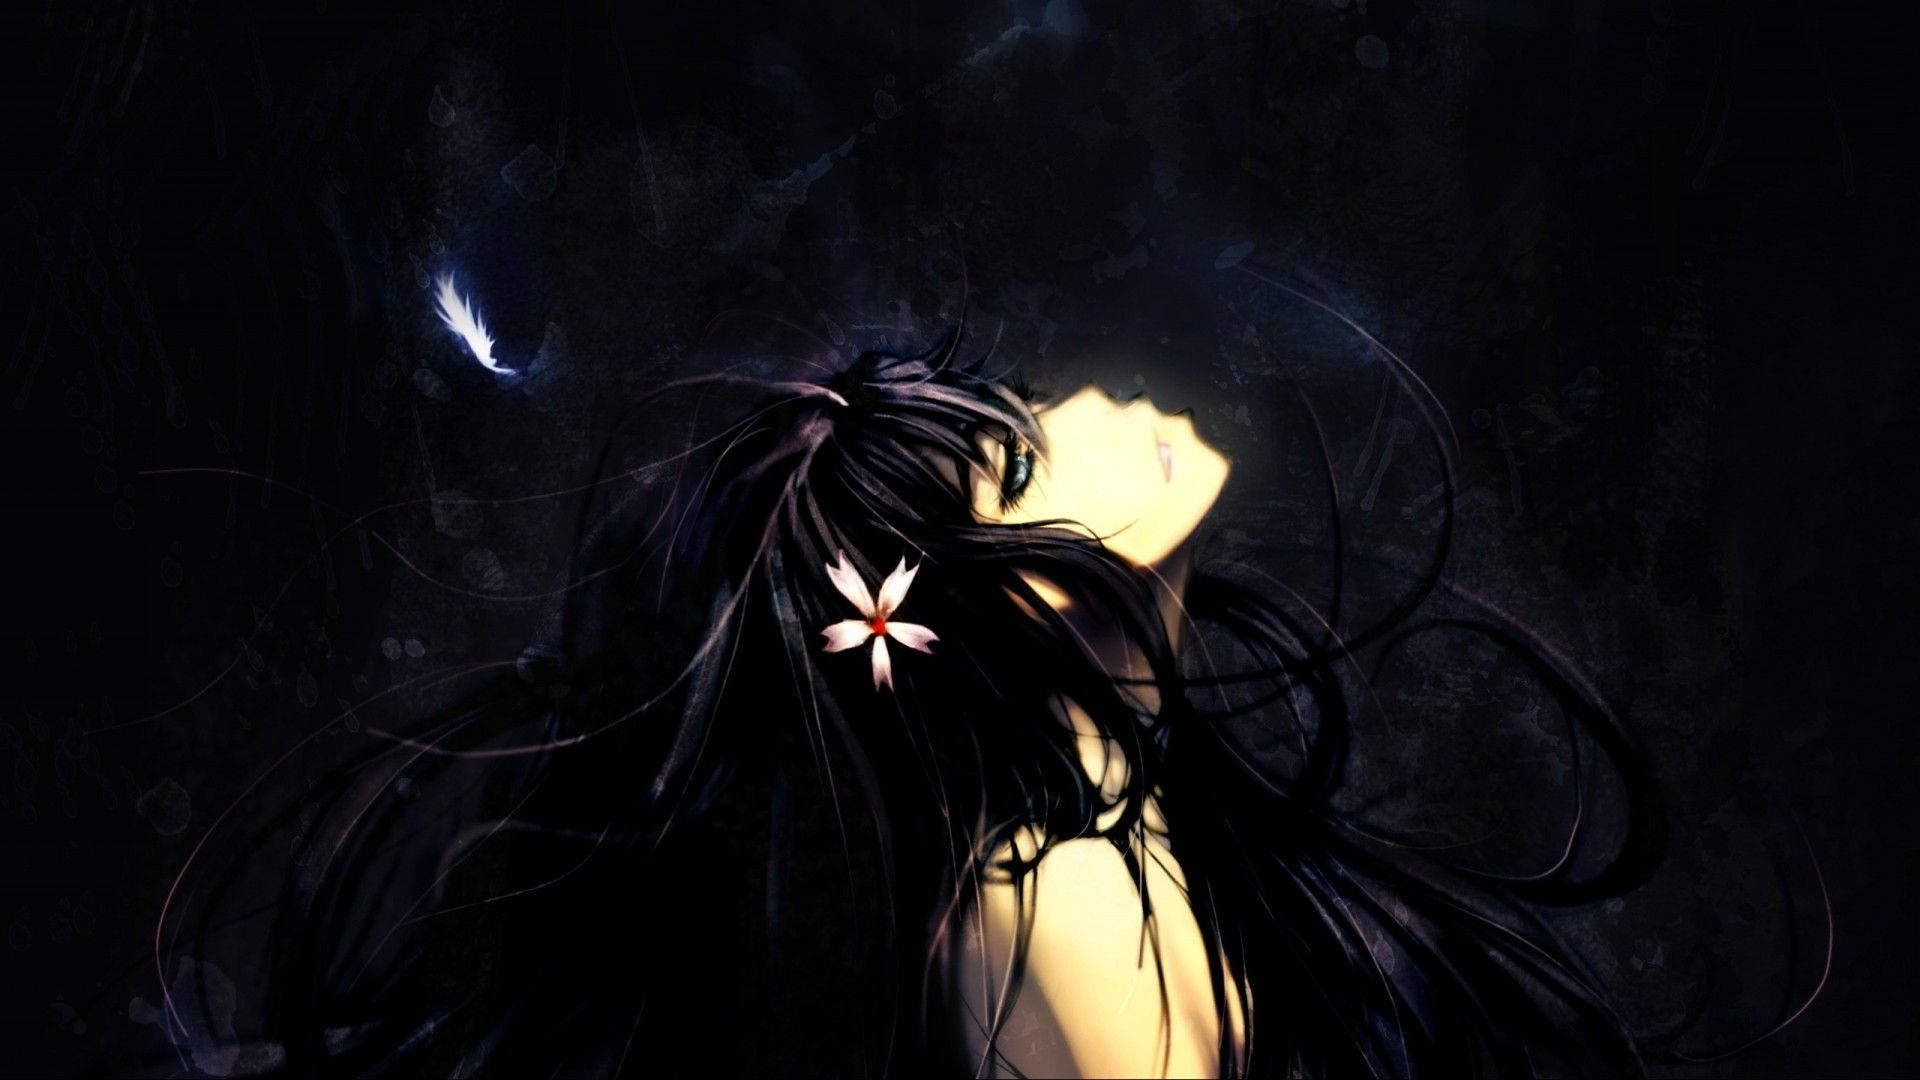 Dark Anime Girl With Black Hair Background